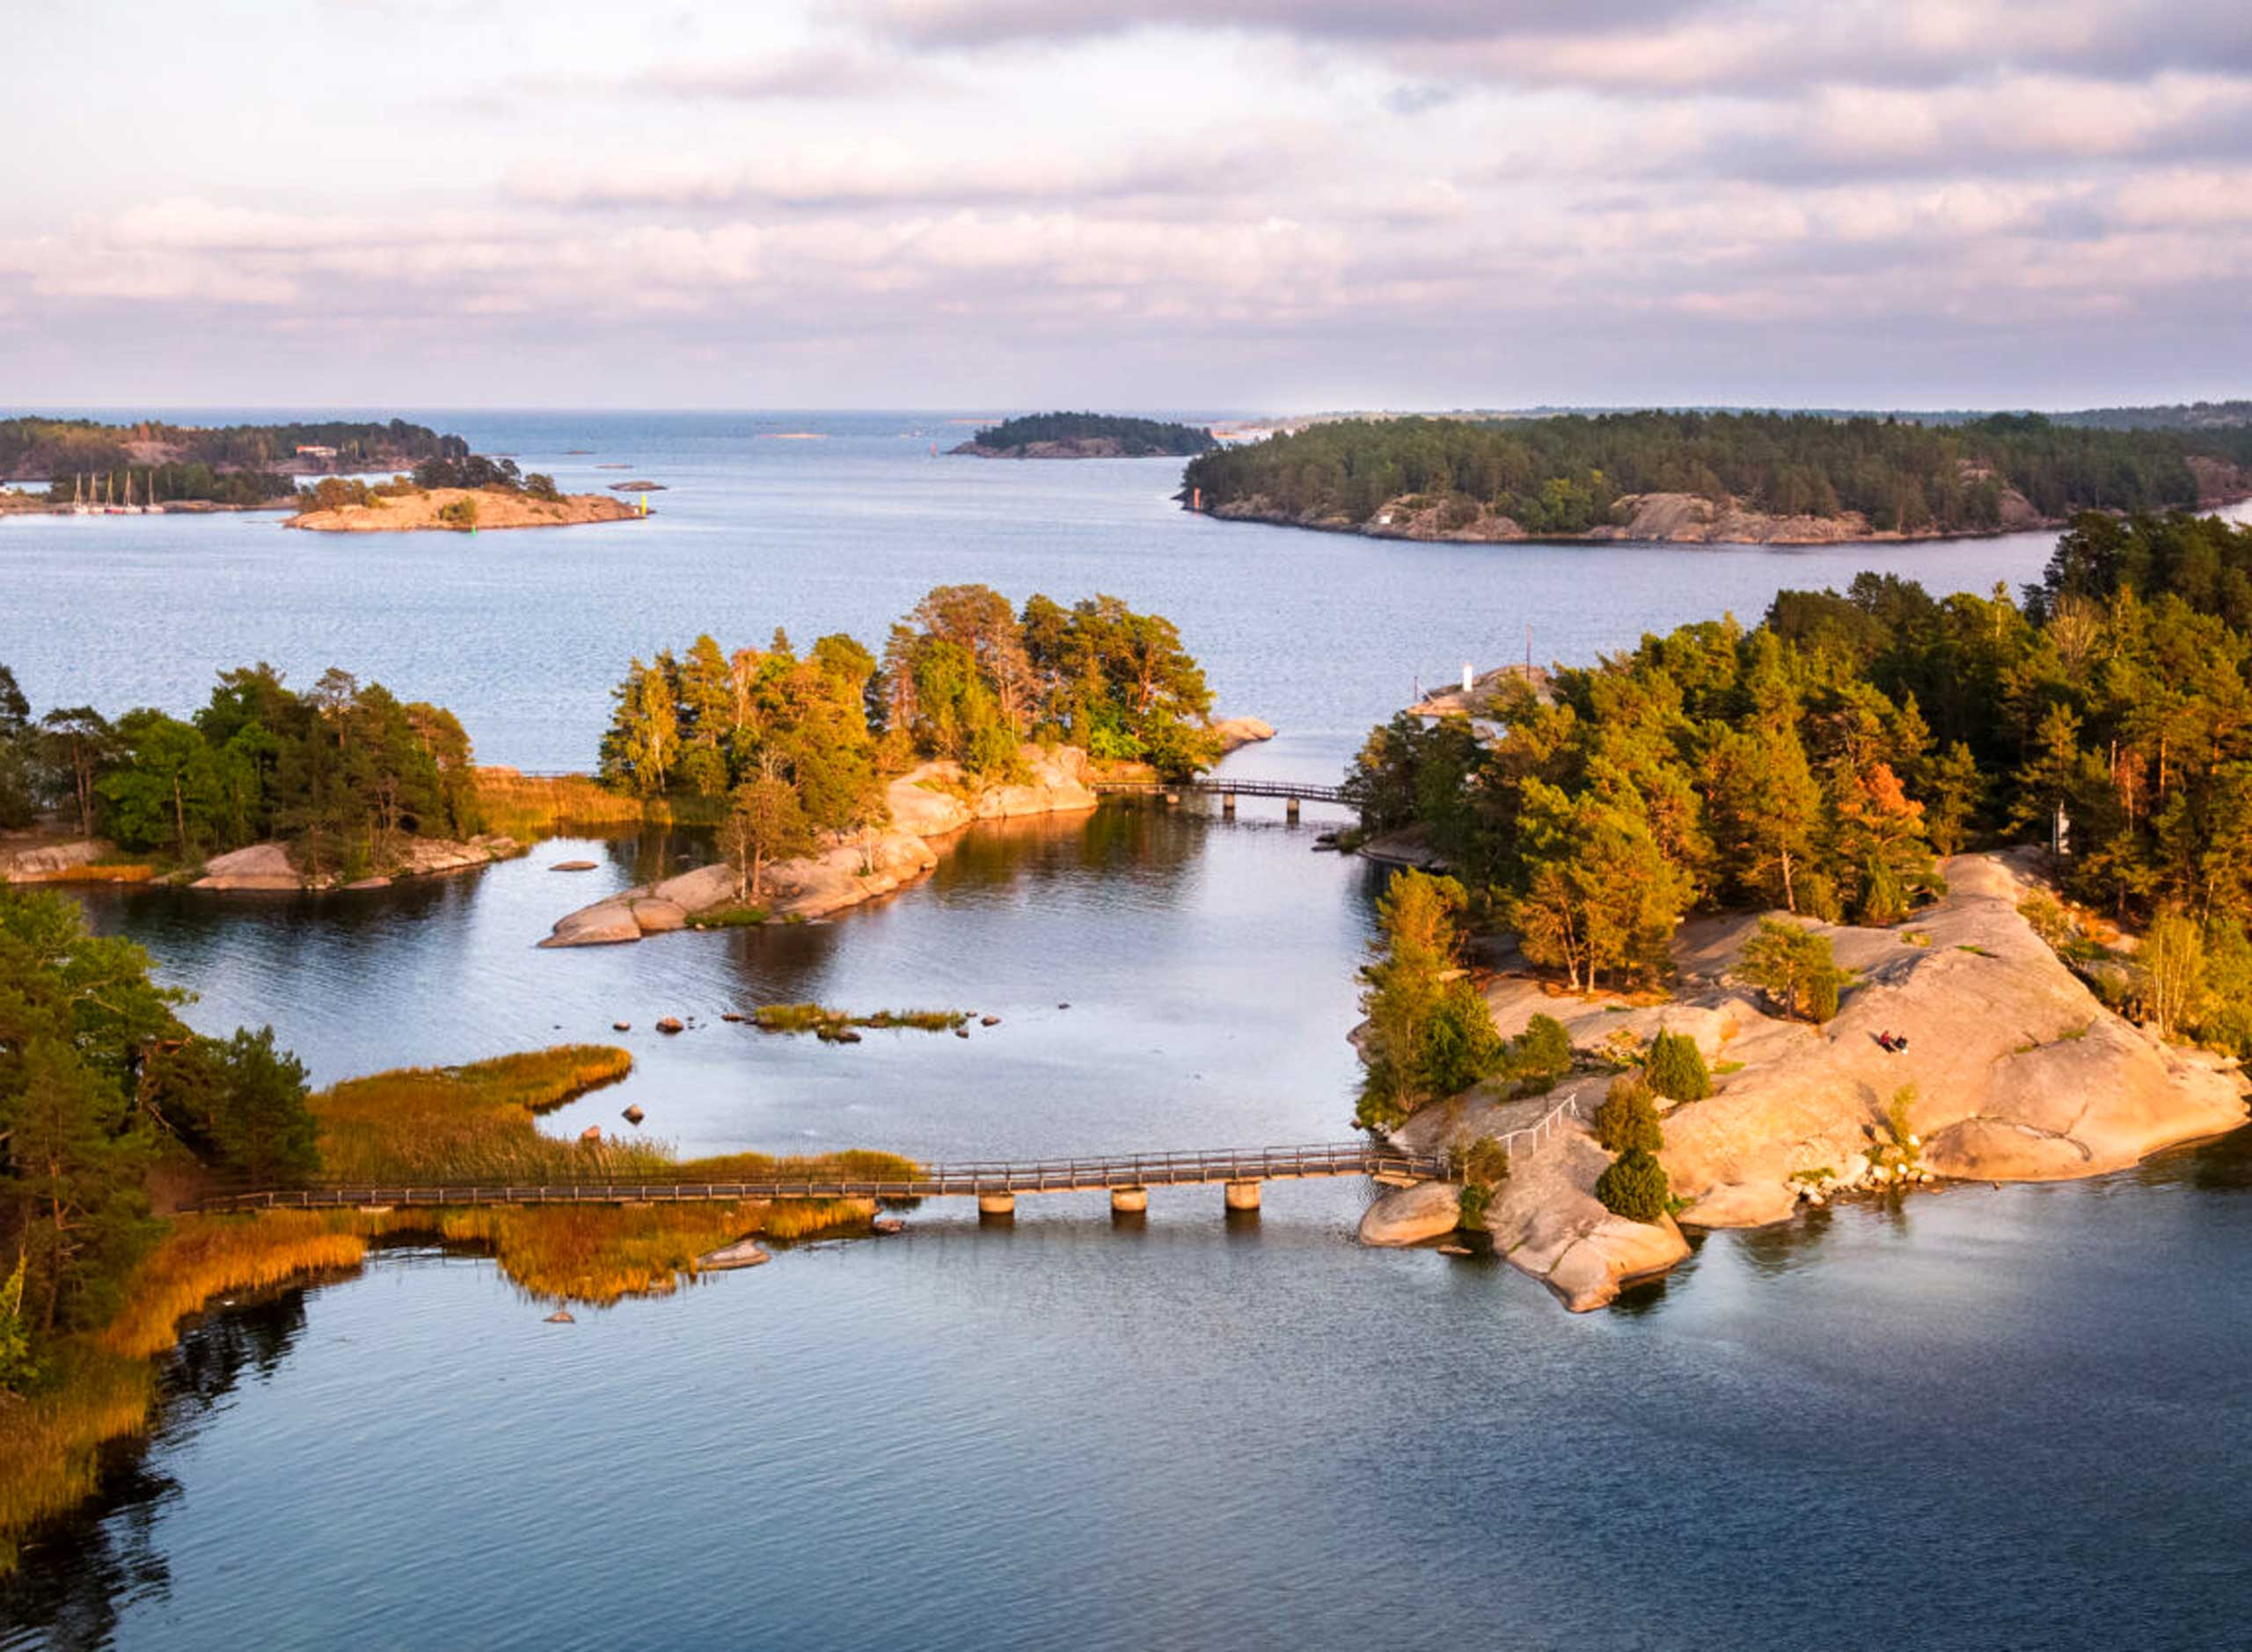 Västervik Resort is surrounded by beautiful nature. Copyright: Västervik Resort